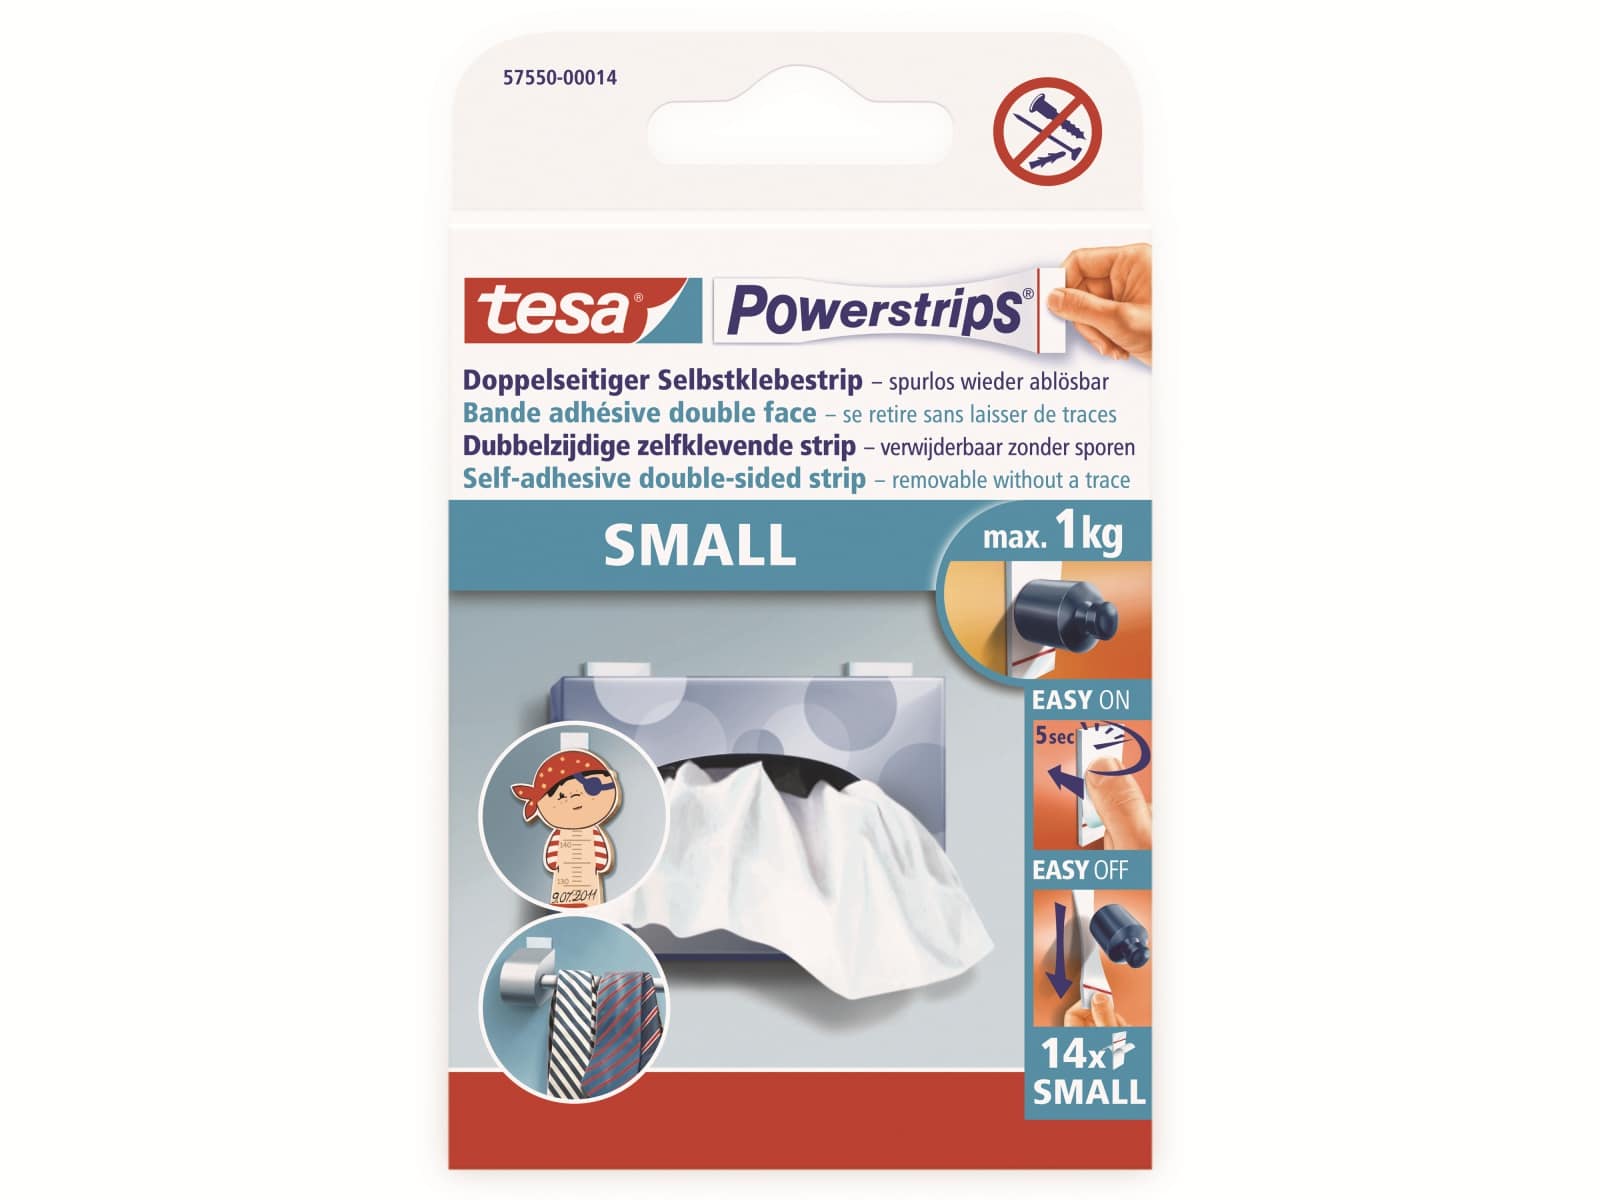 TESA Powerstrips® Small, 57550-00014-21